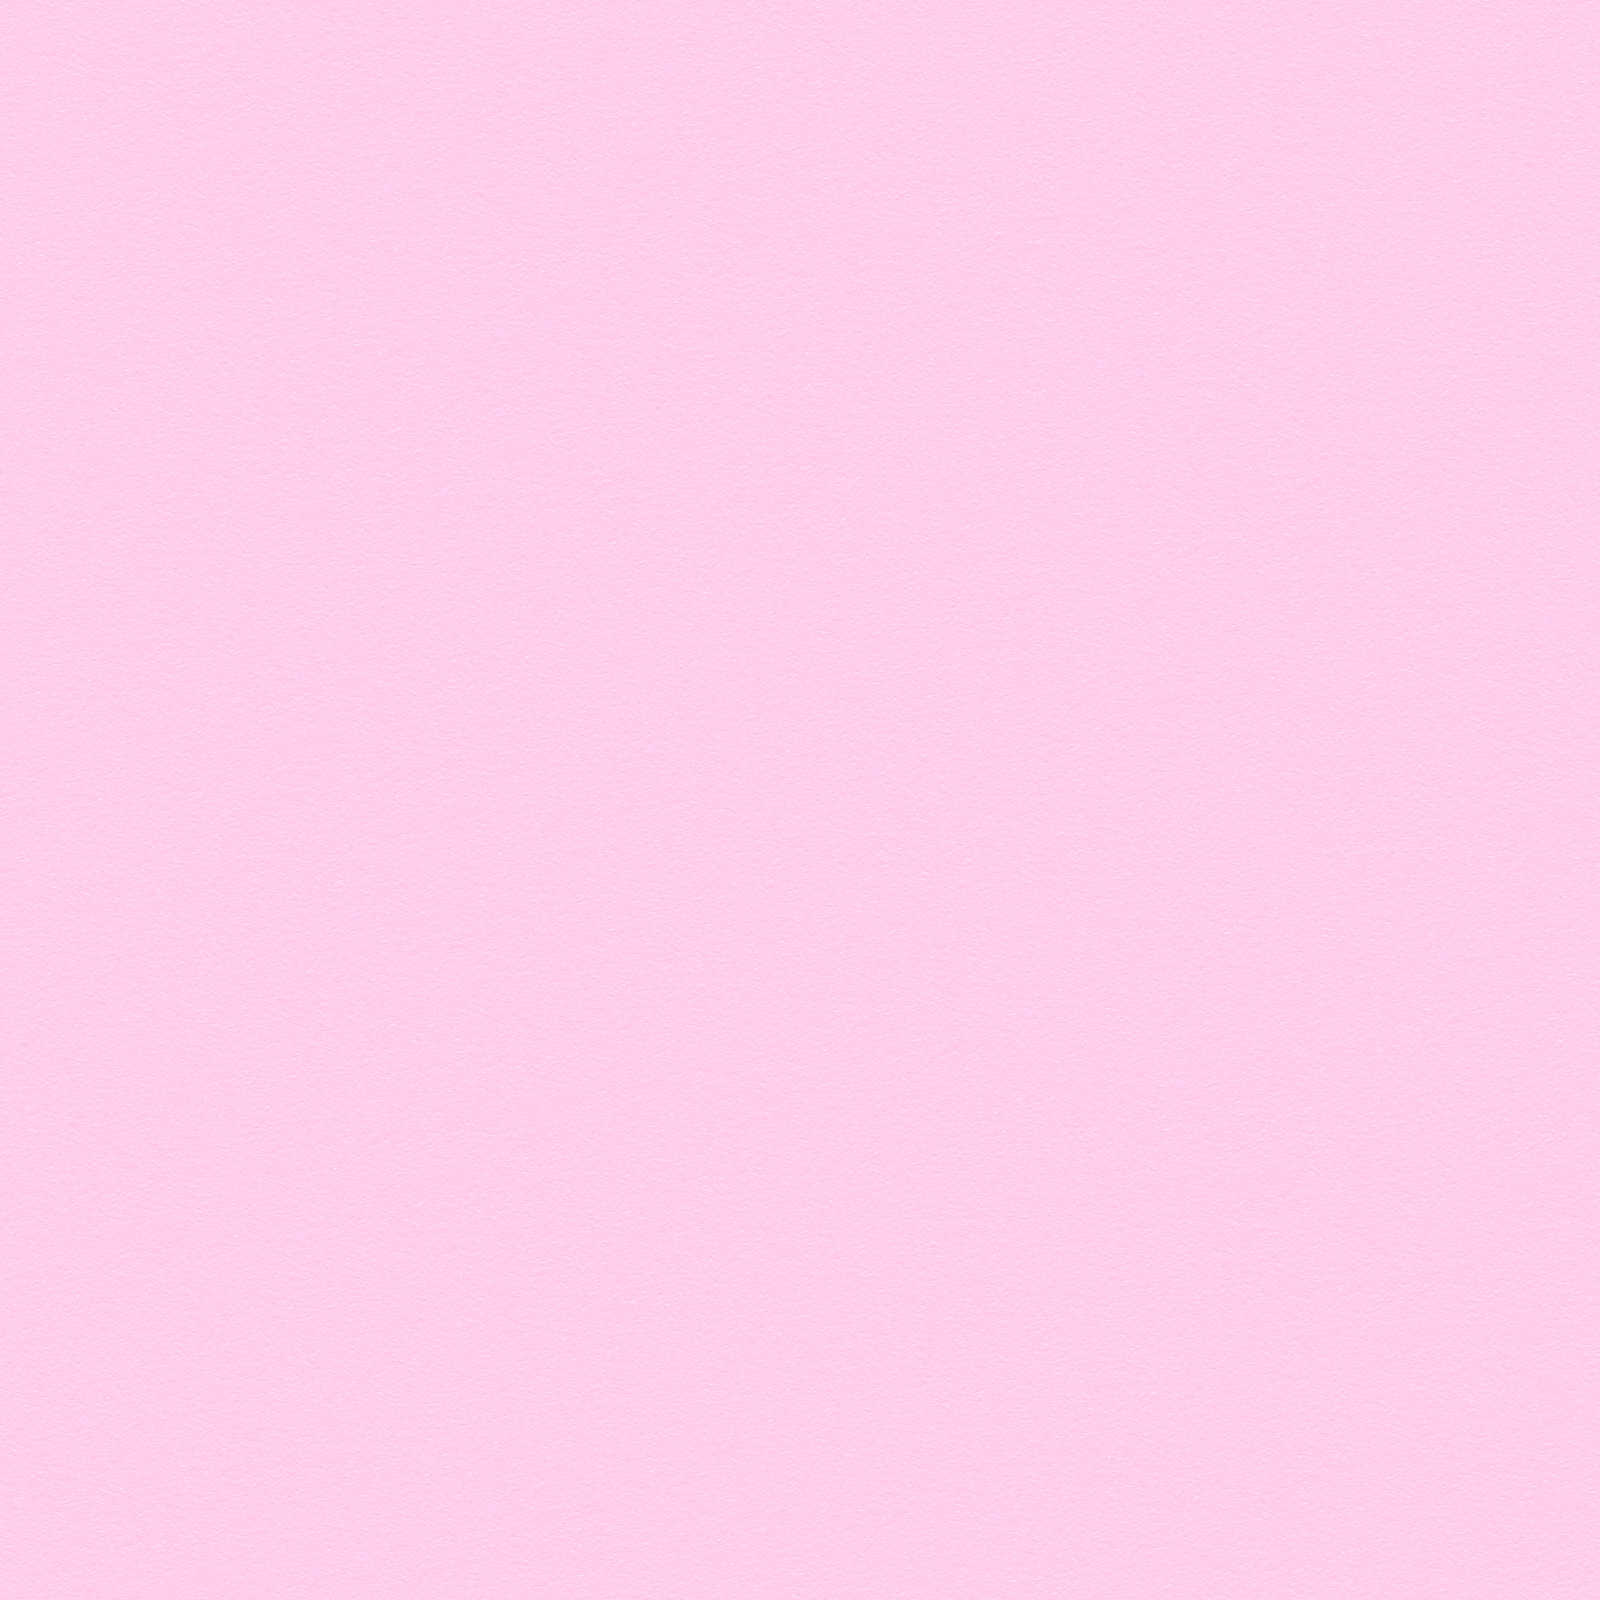         Papel pintado no tejido rosa - mate con un sutil patrón de textura
    